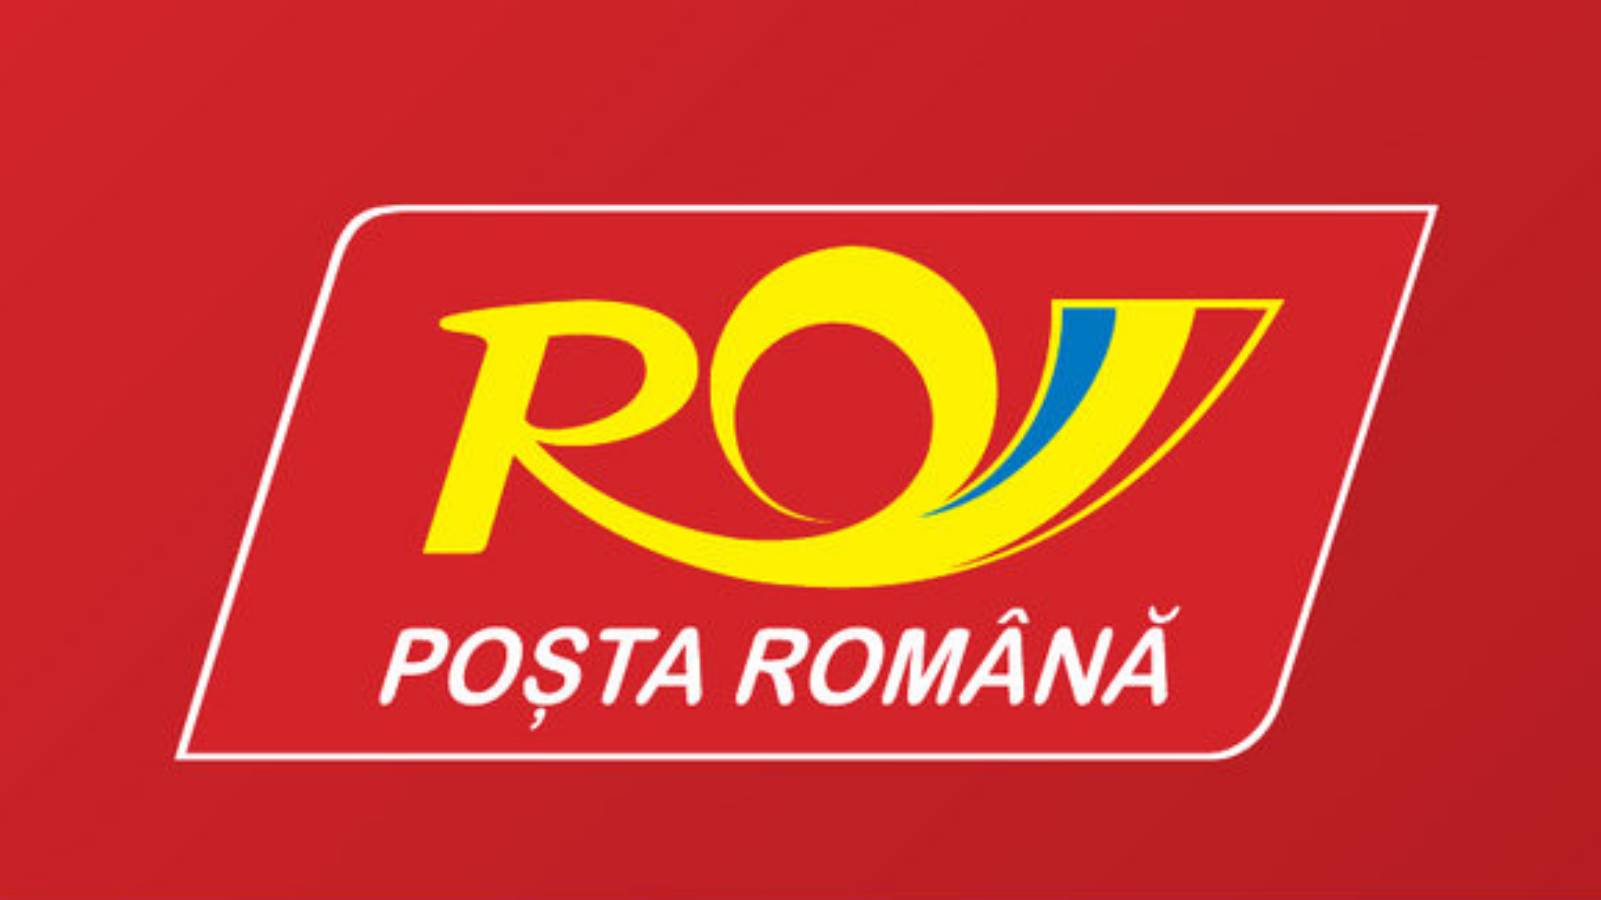 Roemeense post Italië verzending